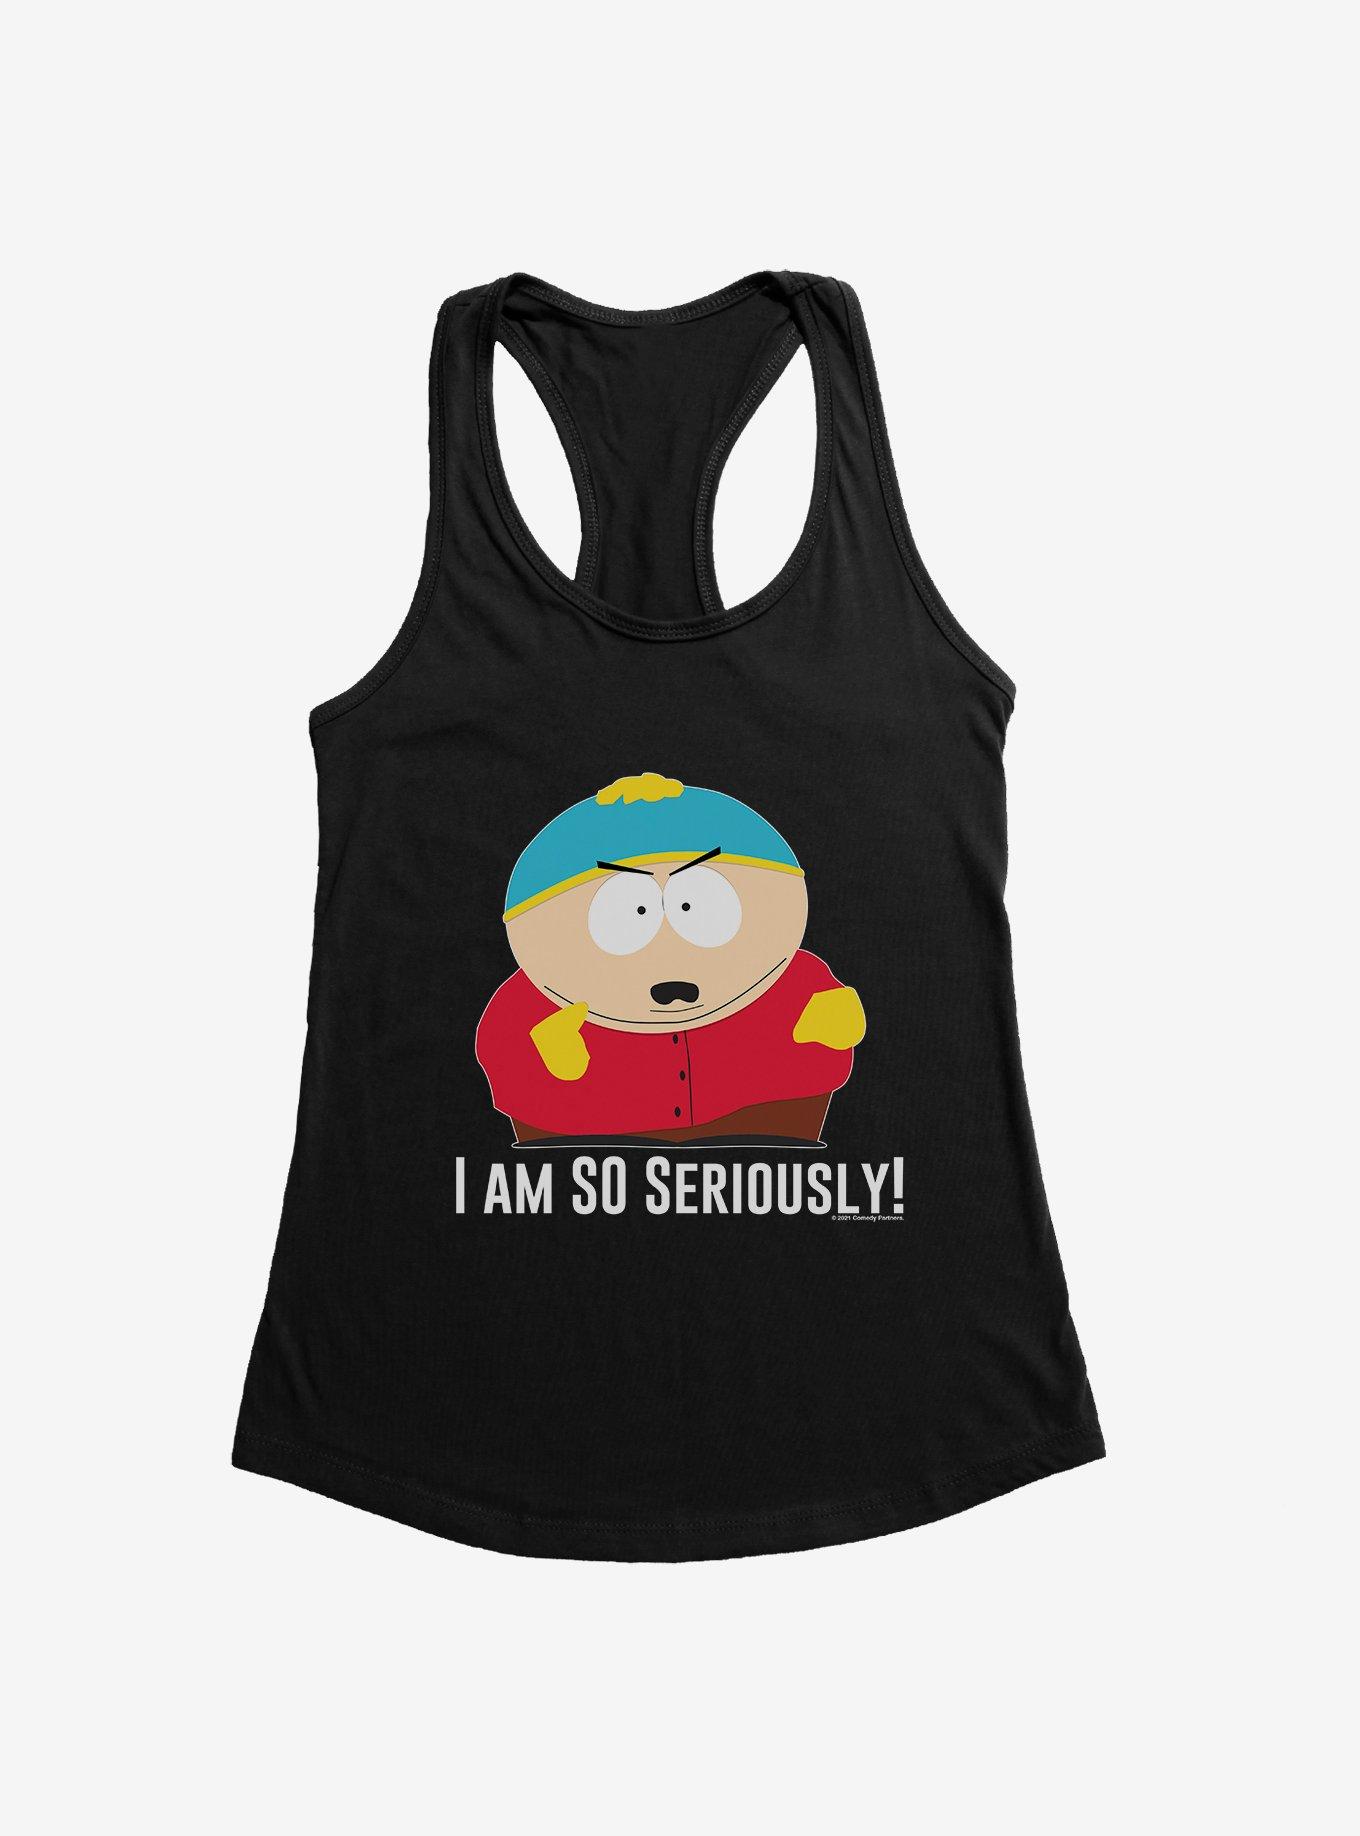 South Park Season Reference Cartman Seriously Girls Tank